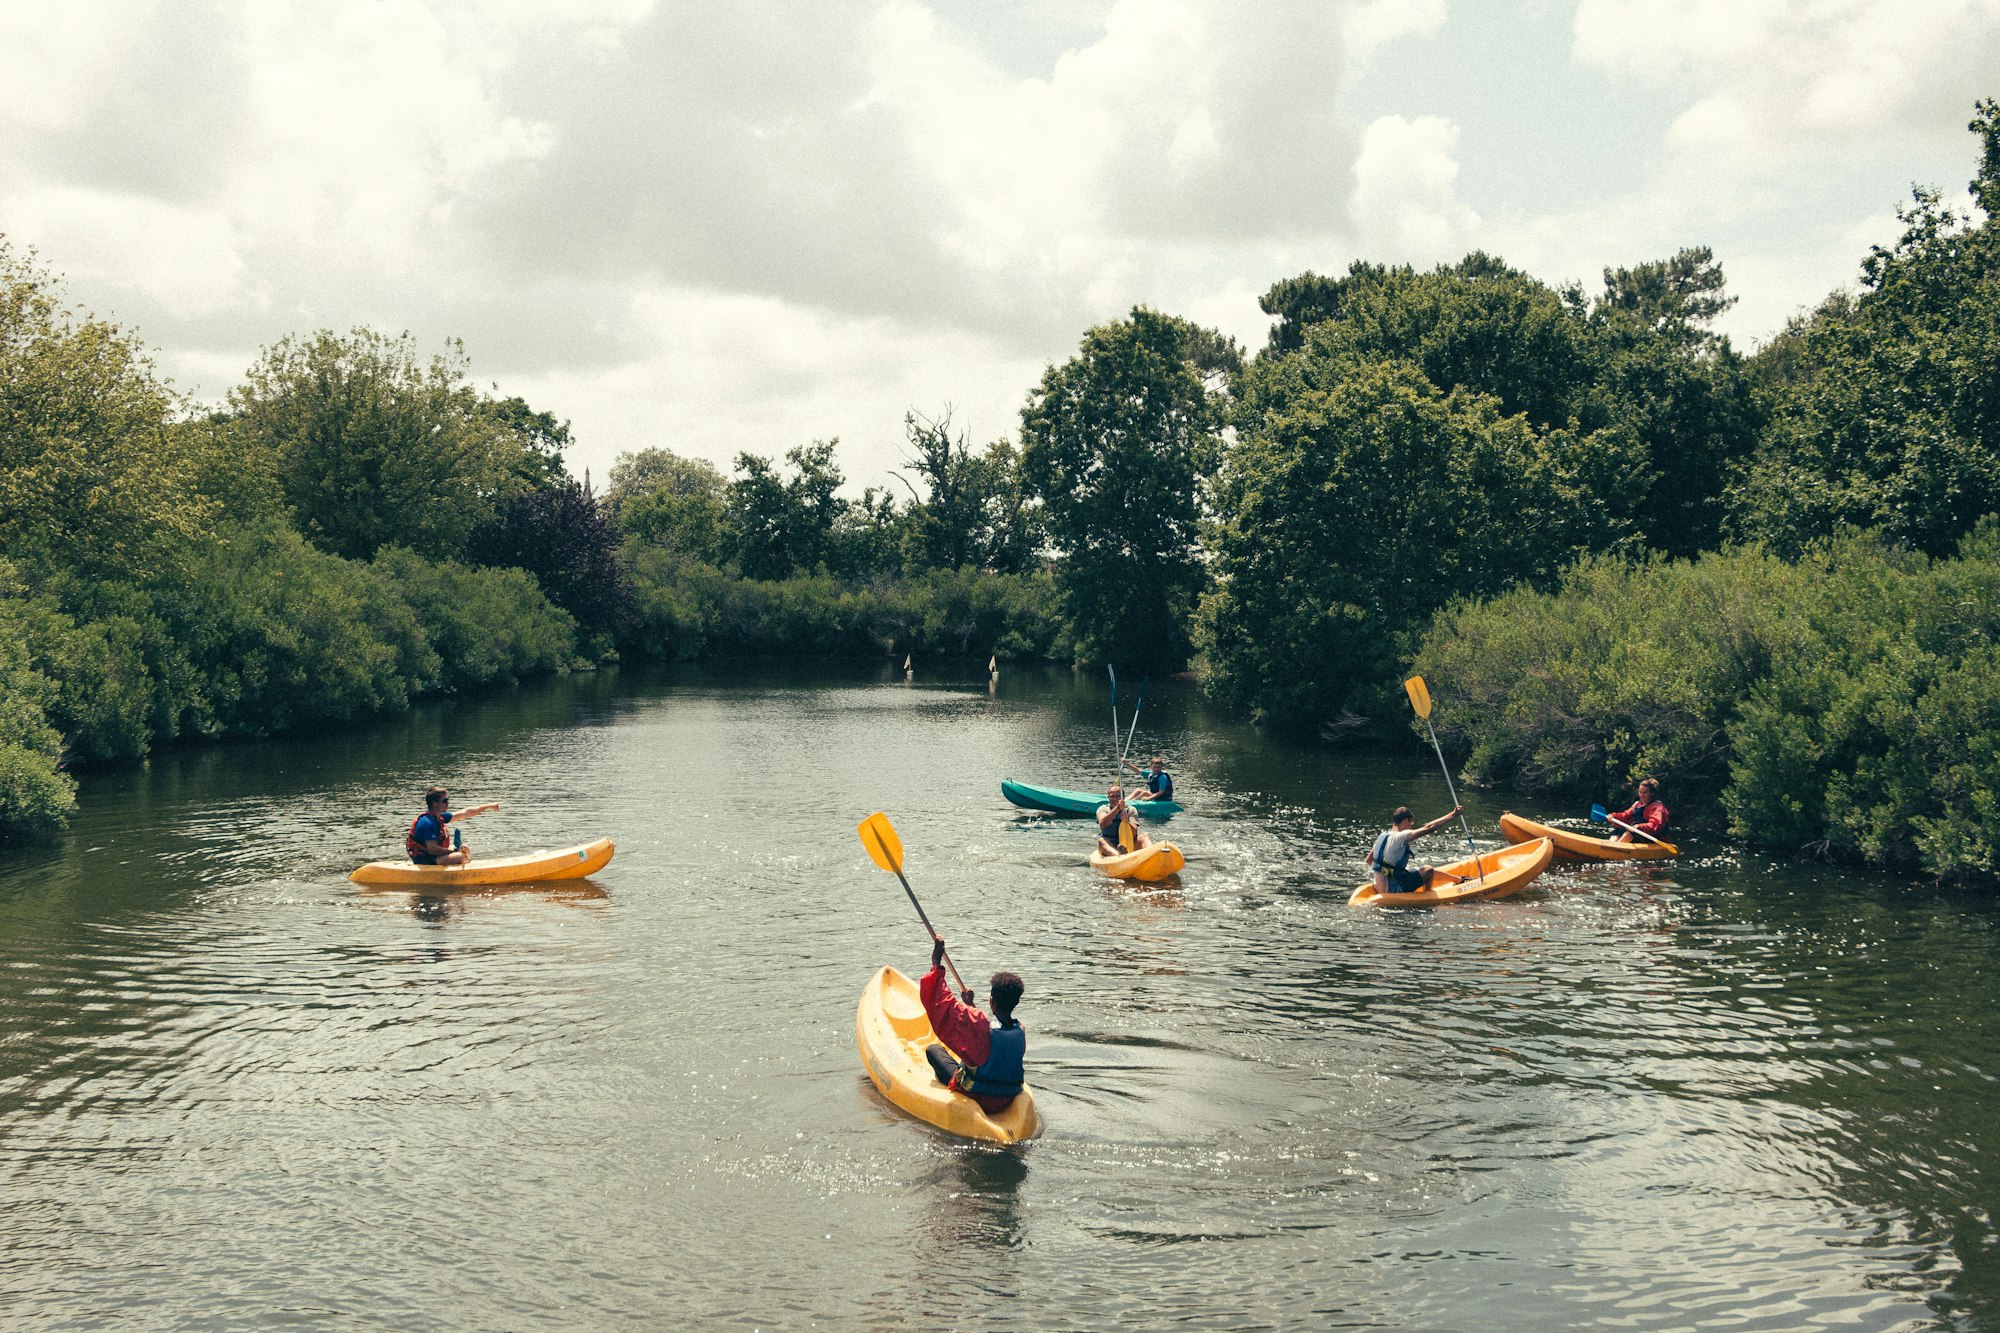 Cours de kayak proche du Teich
Kayak Course teaching on river lake in France / Archachon